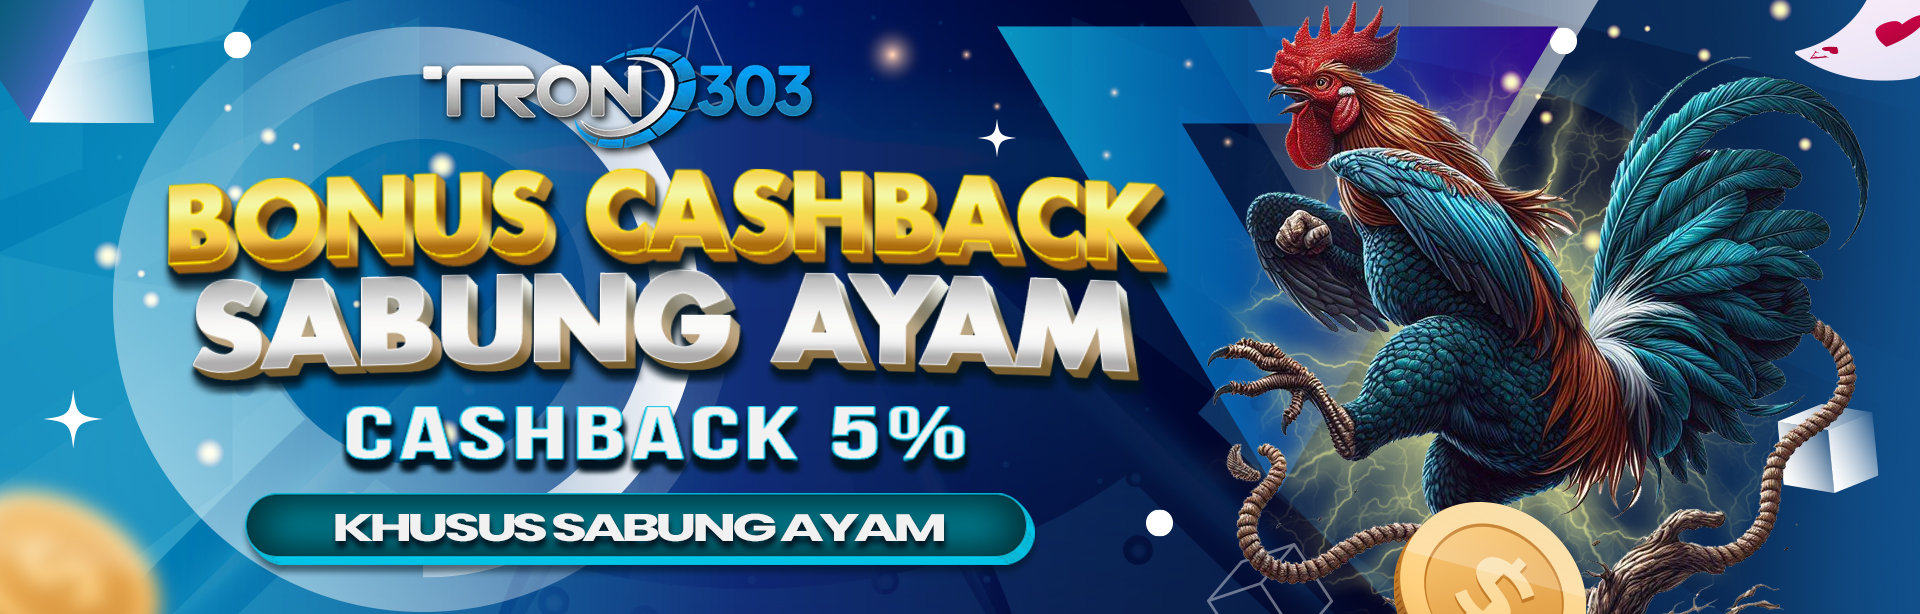 BONUS CASHBACK 5% SABUNG AYAM